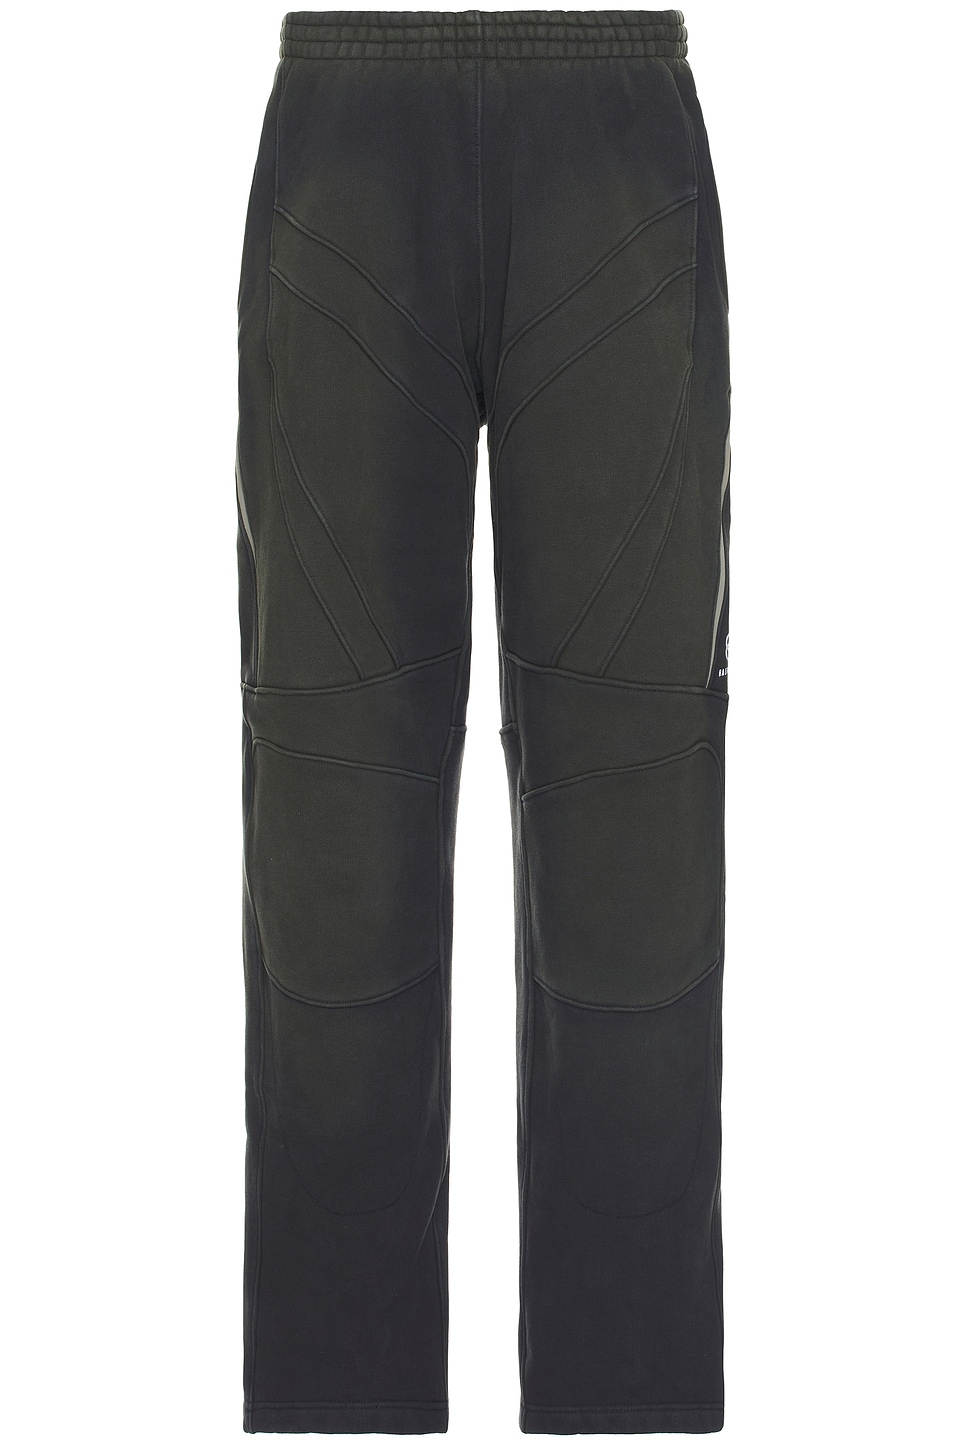 Image 1 of Balenciaga Biker Sweatpants in Black & White